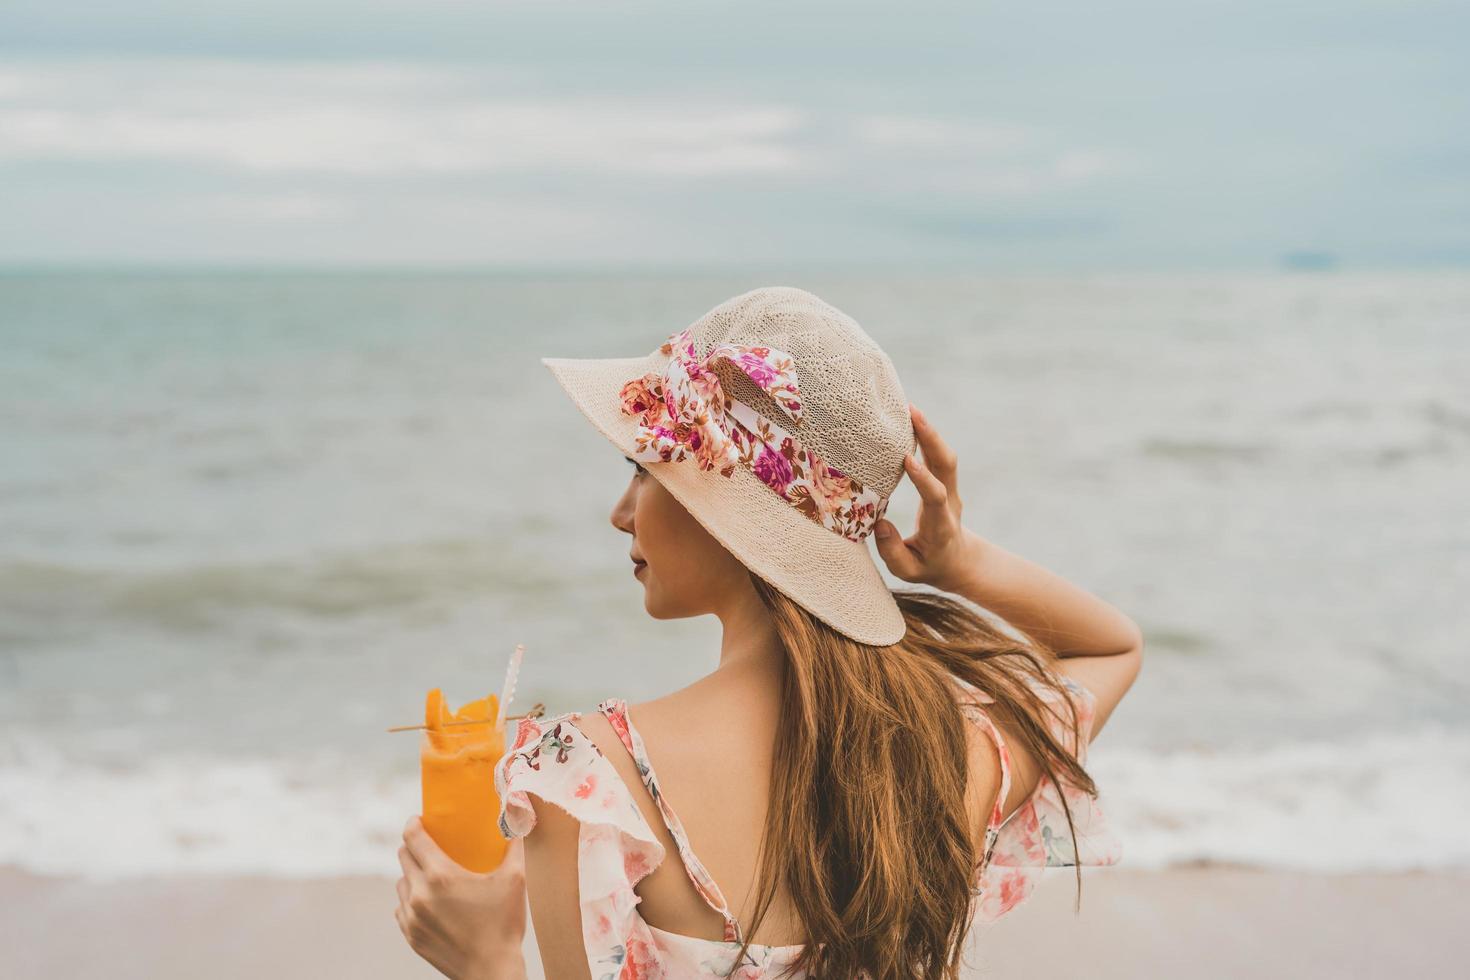 relájese mujer bebiendo refrescante cóctel de naranja en la playa foto